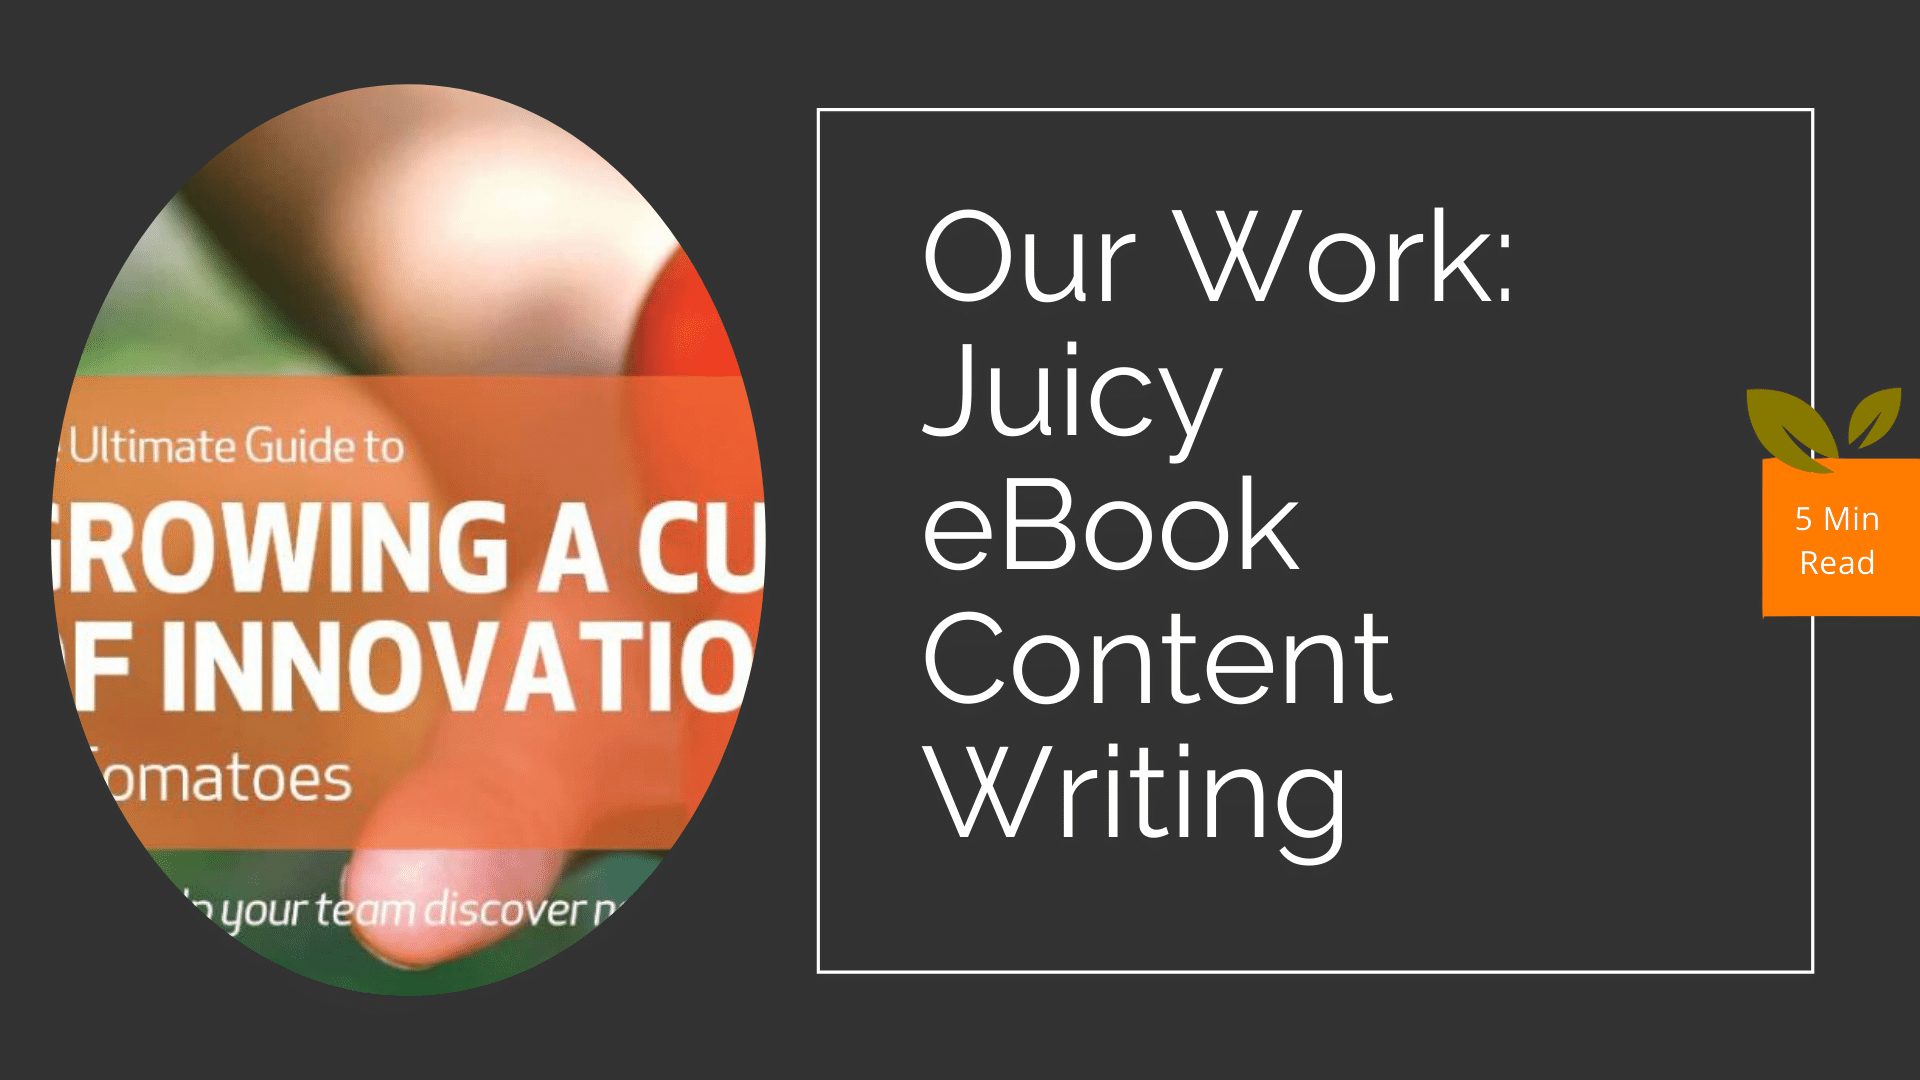 Juicy eBook Content Writing Samples